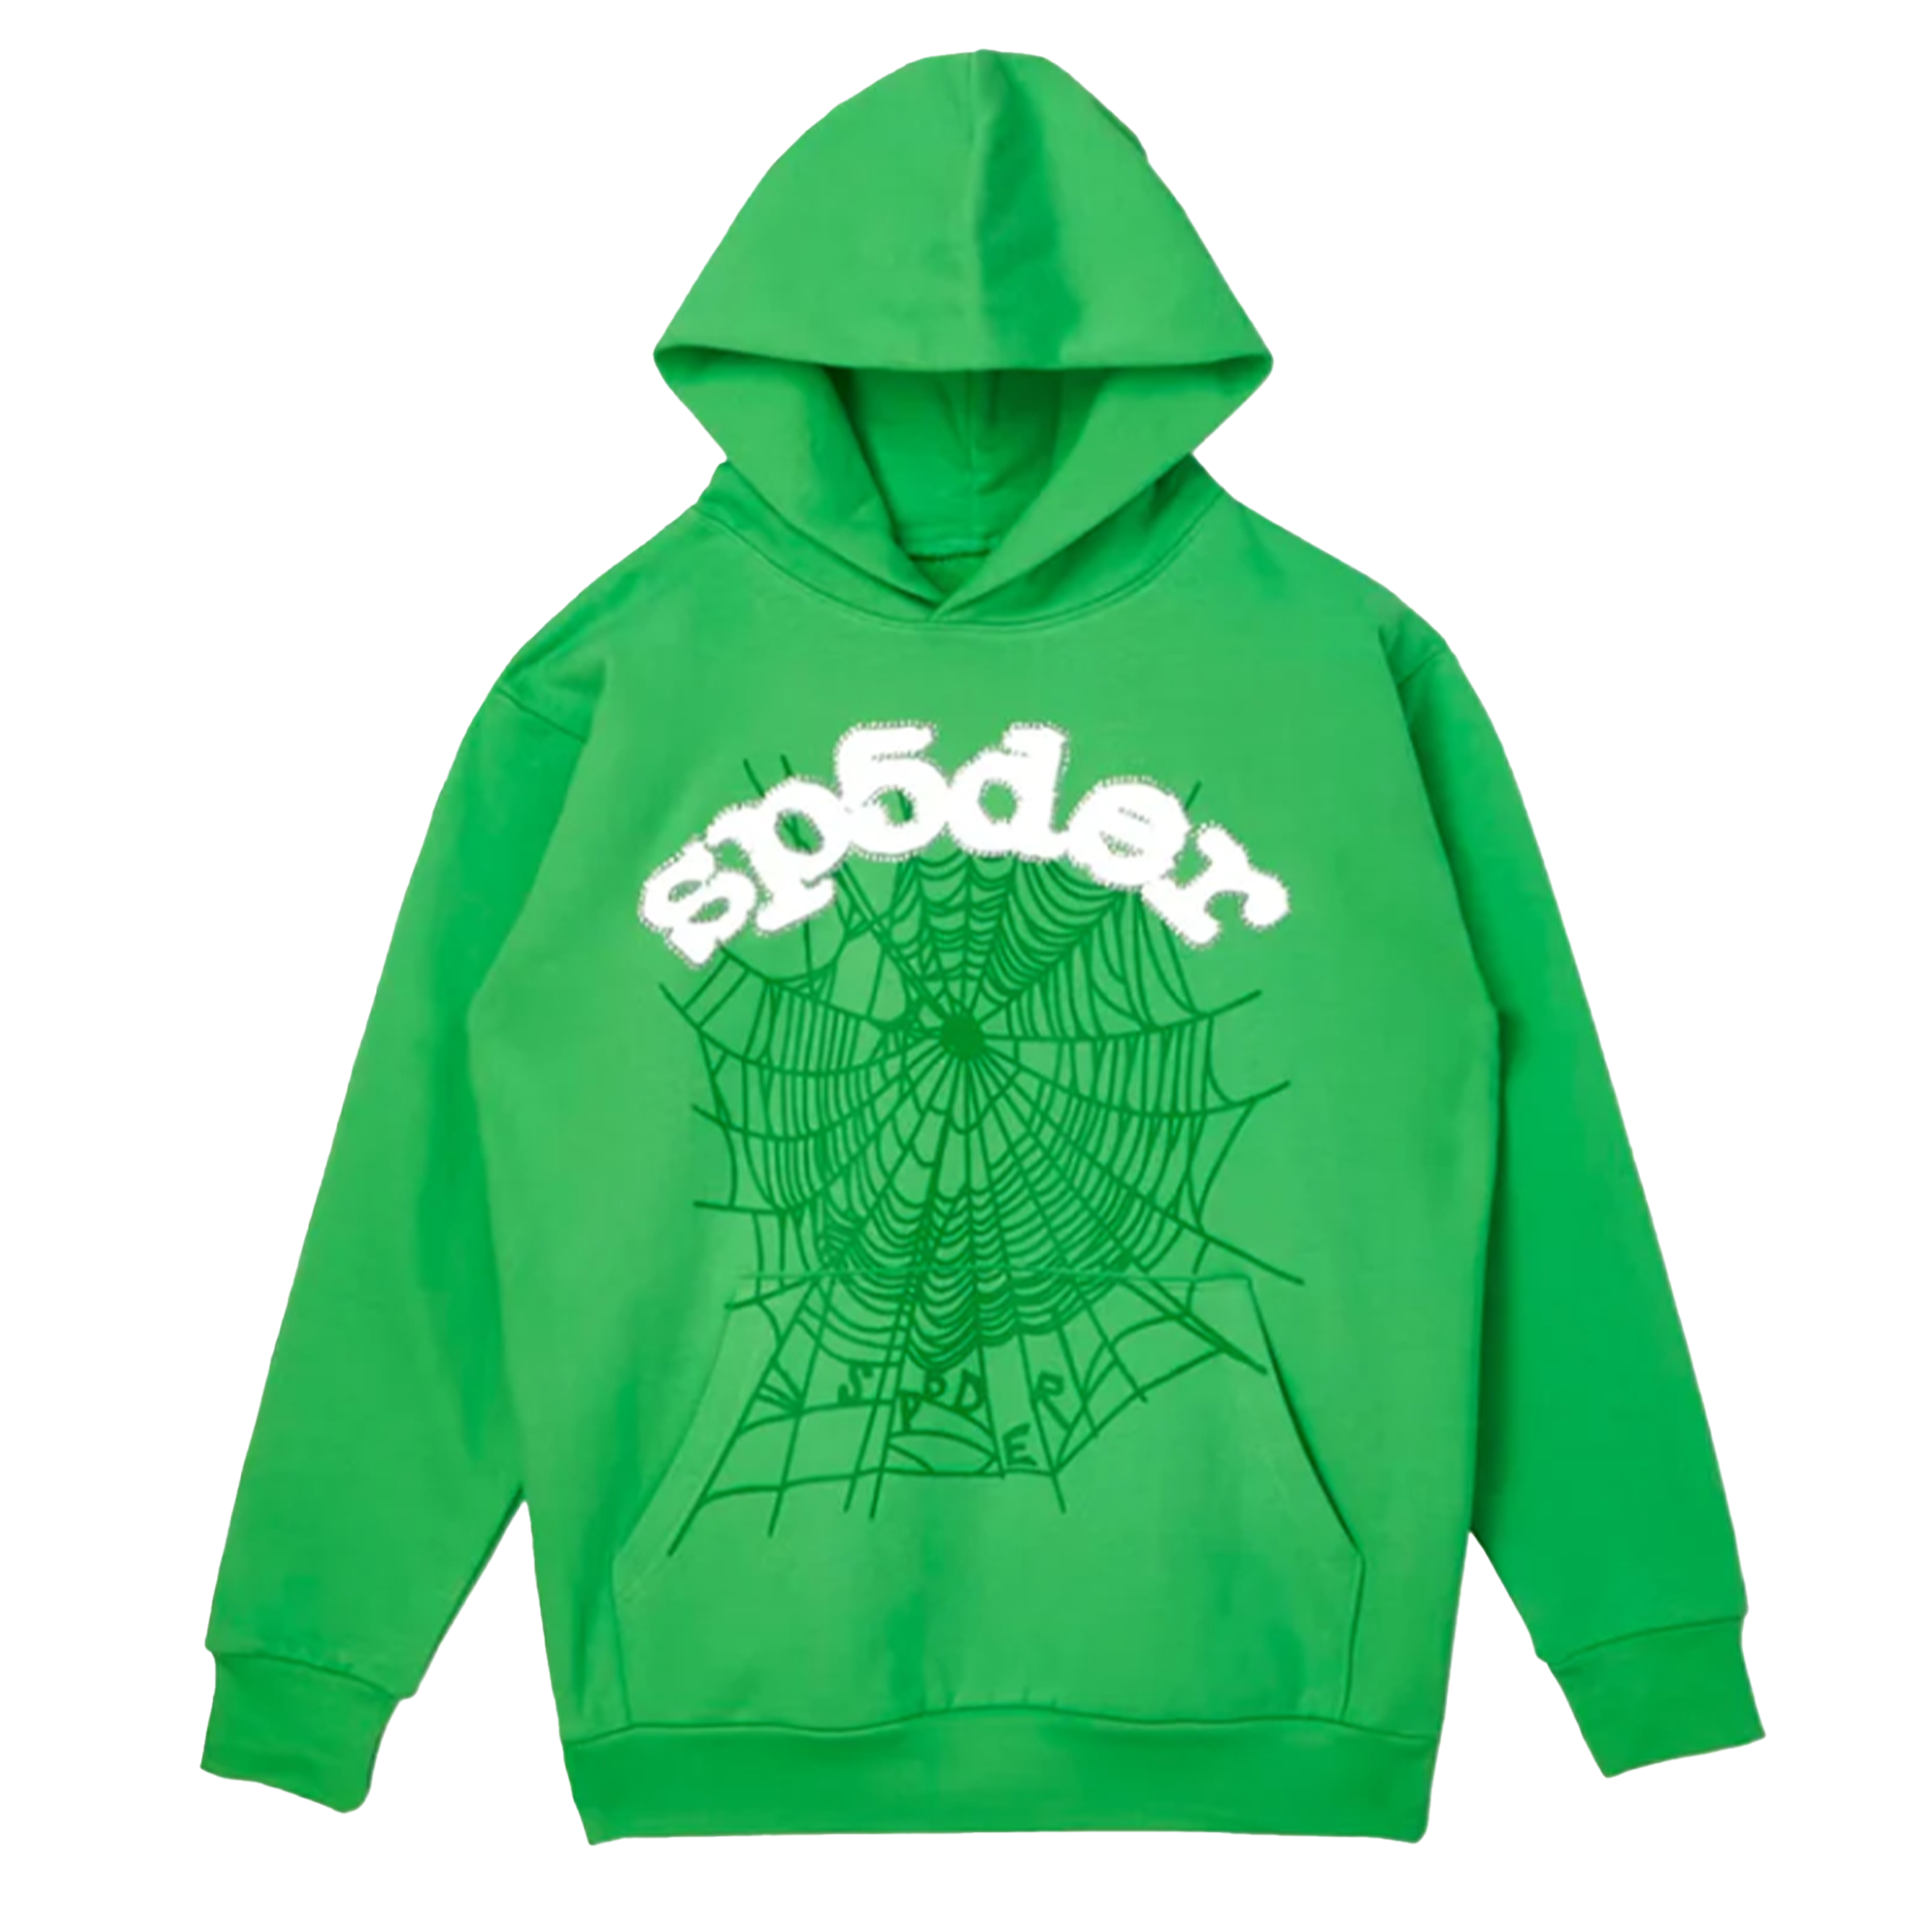 Sp5der "Slime Green Web" Hooded Sweatshirt